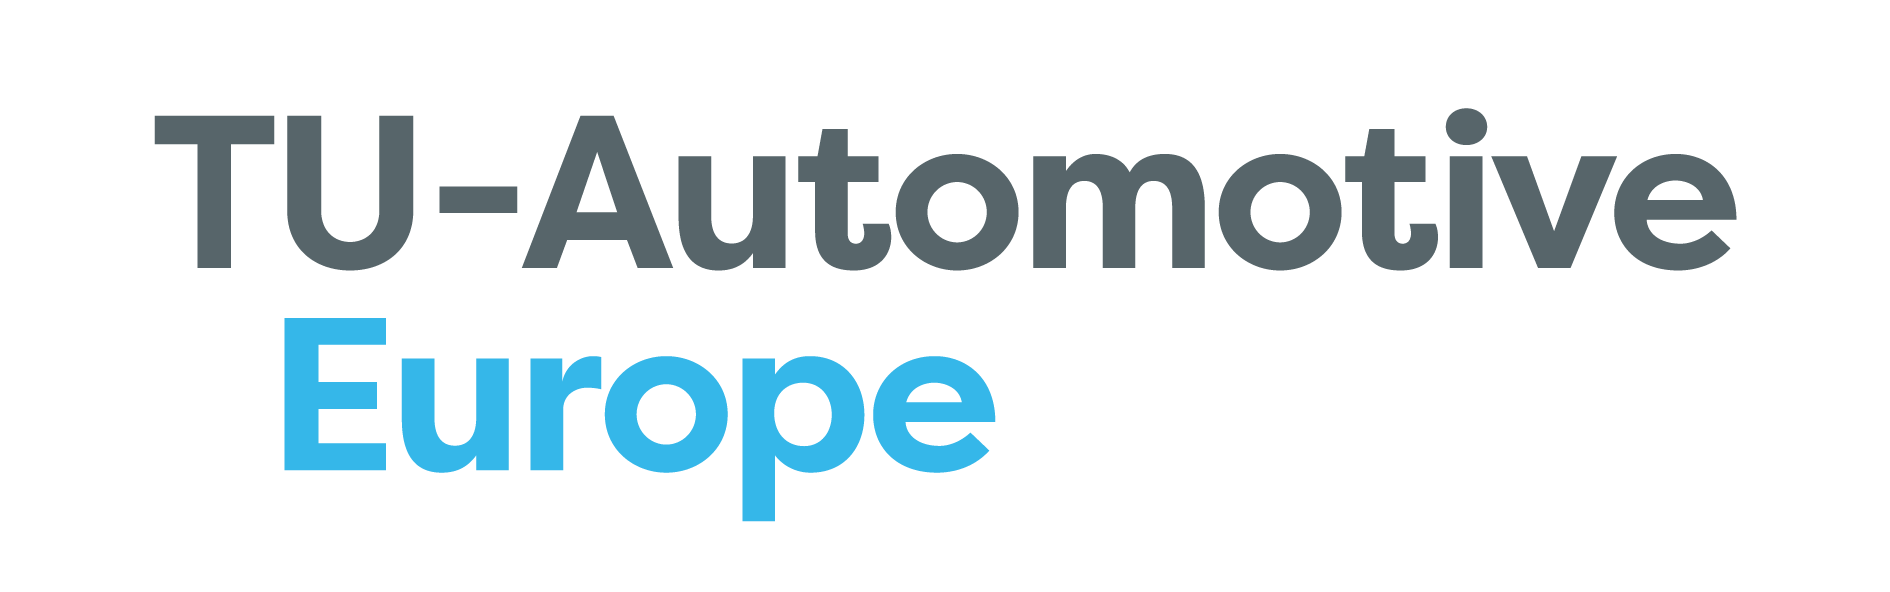 TU-Automotive Europe